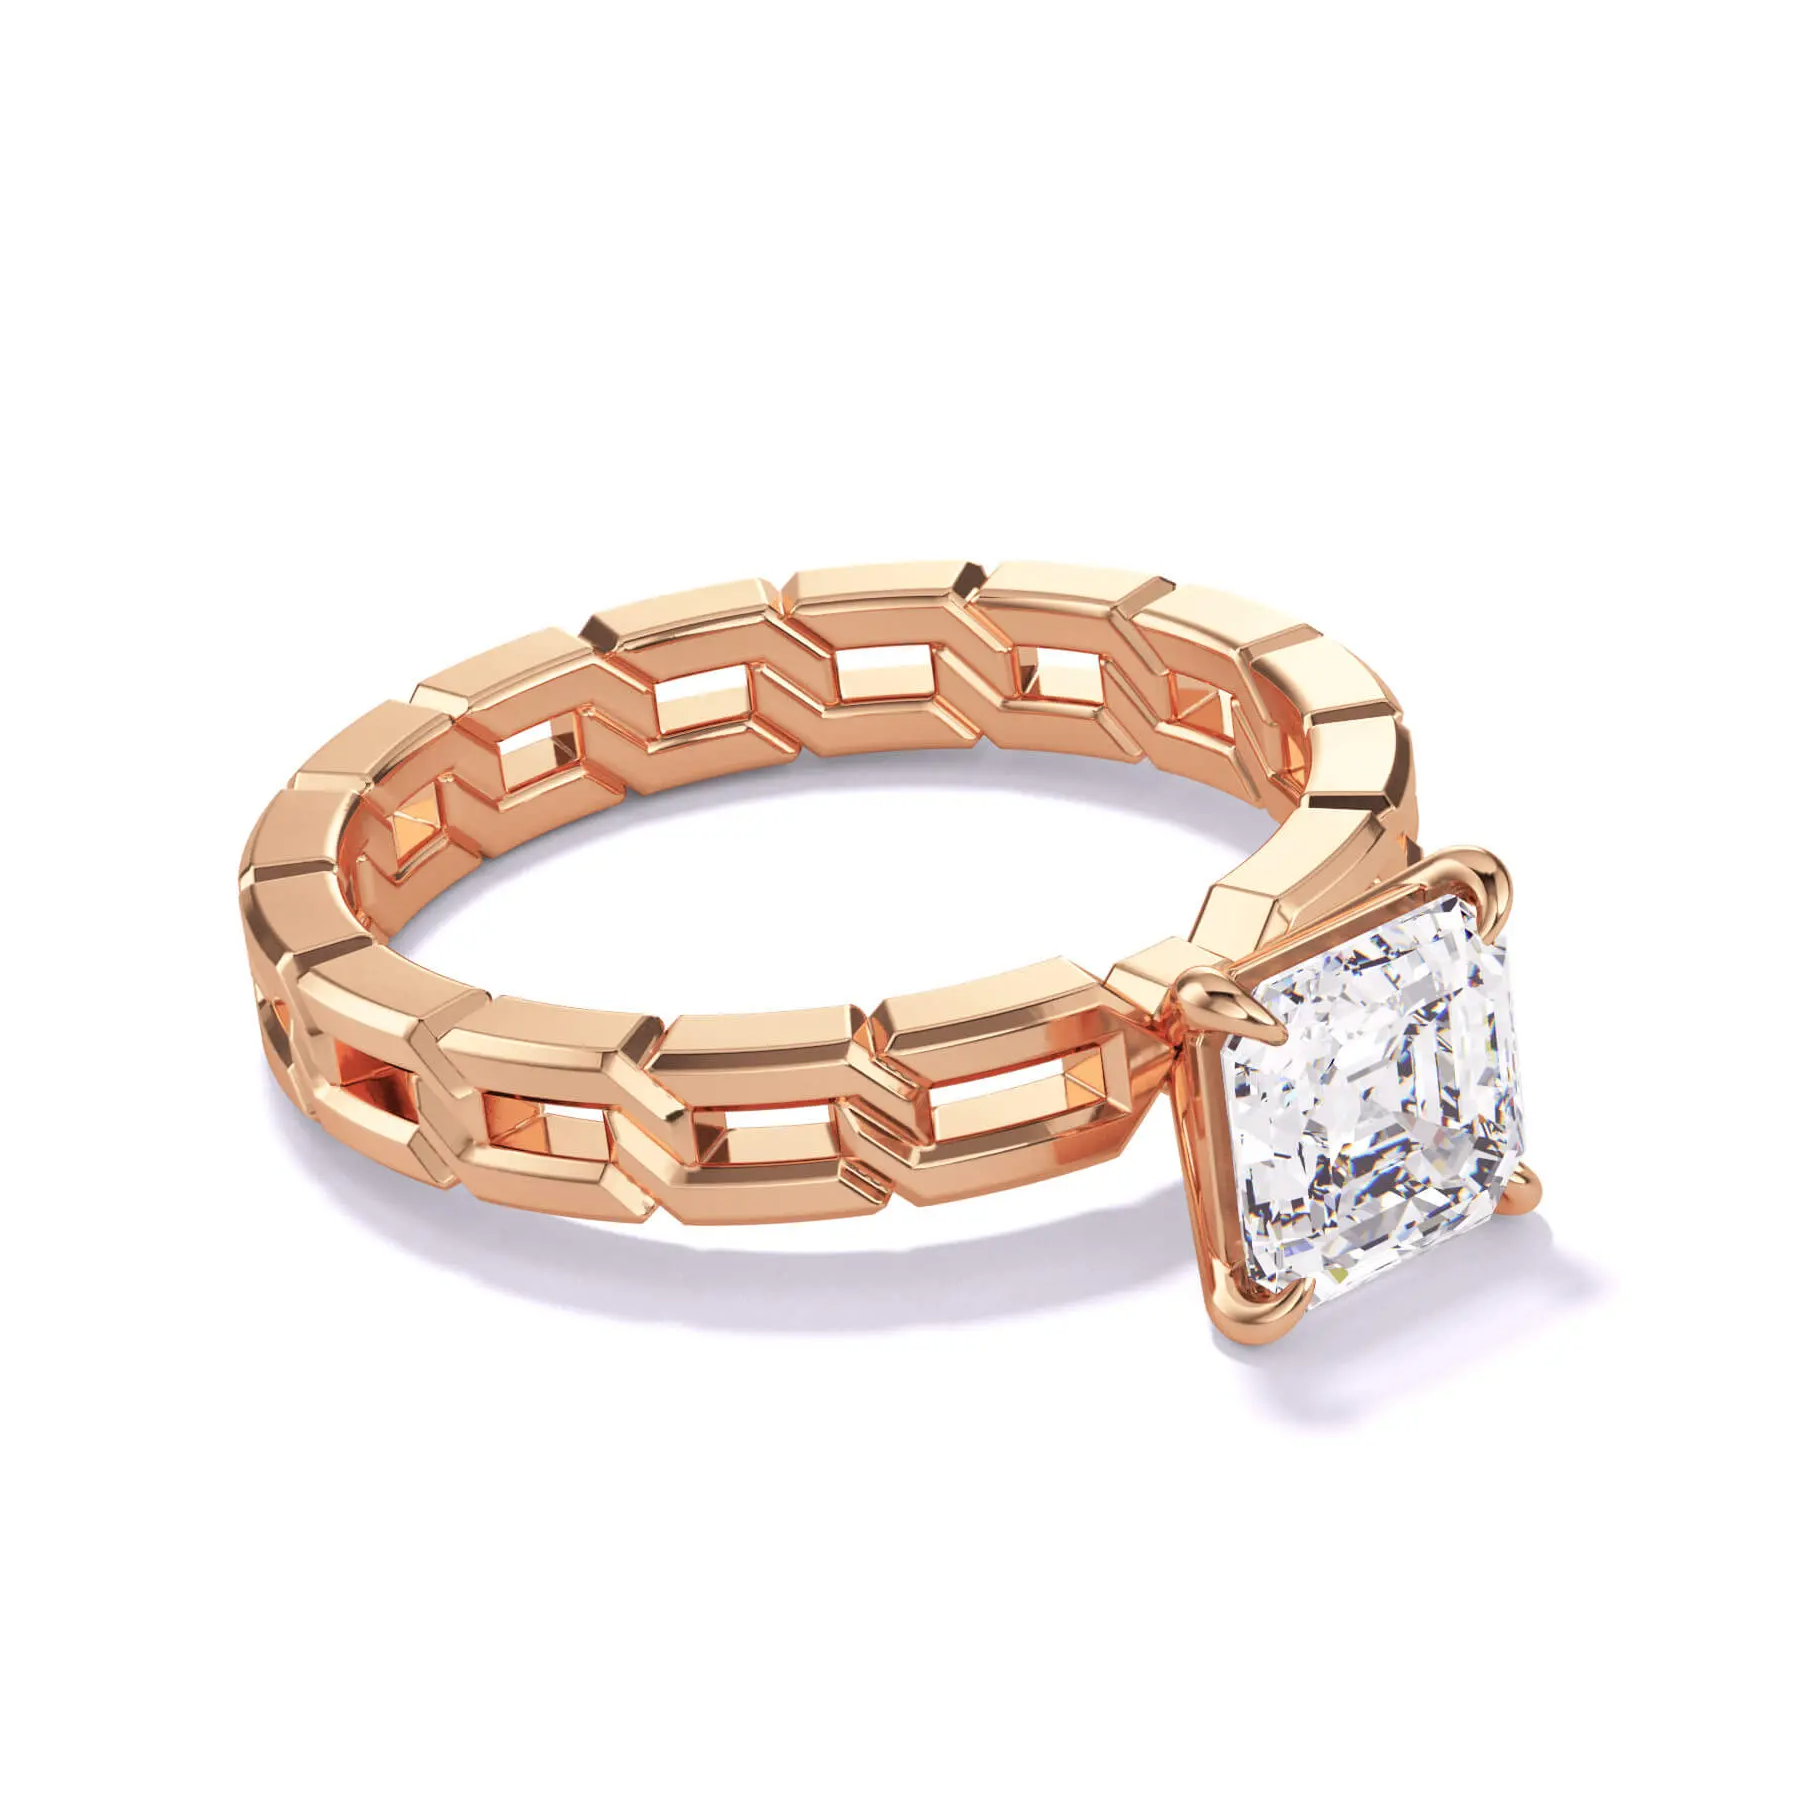 $10,000 diamond engagement ring - asscher cut with a mini 16 link band